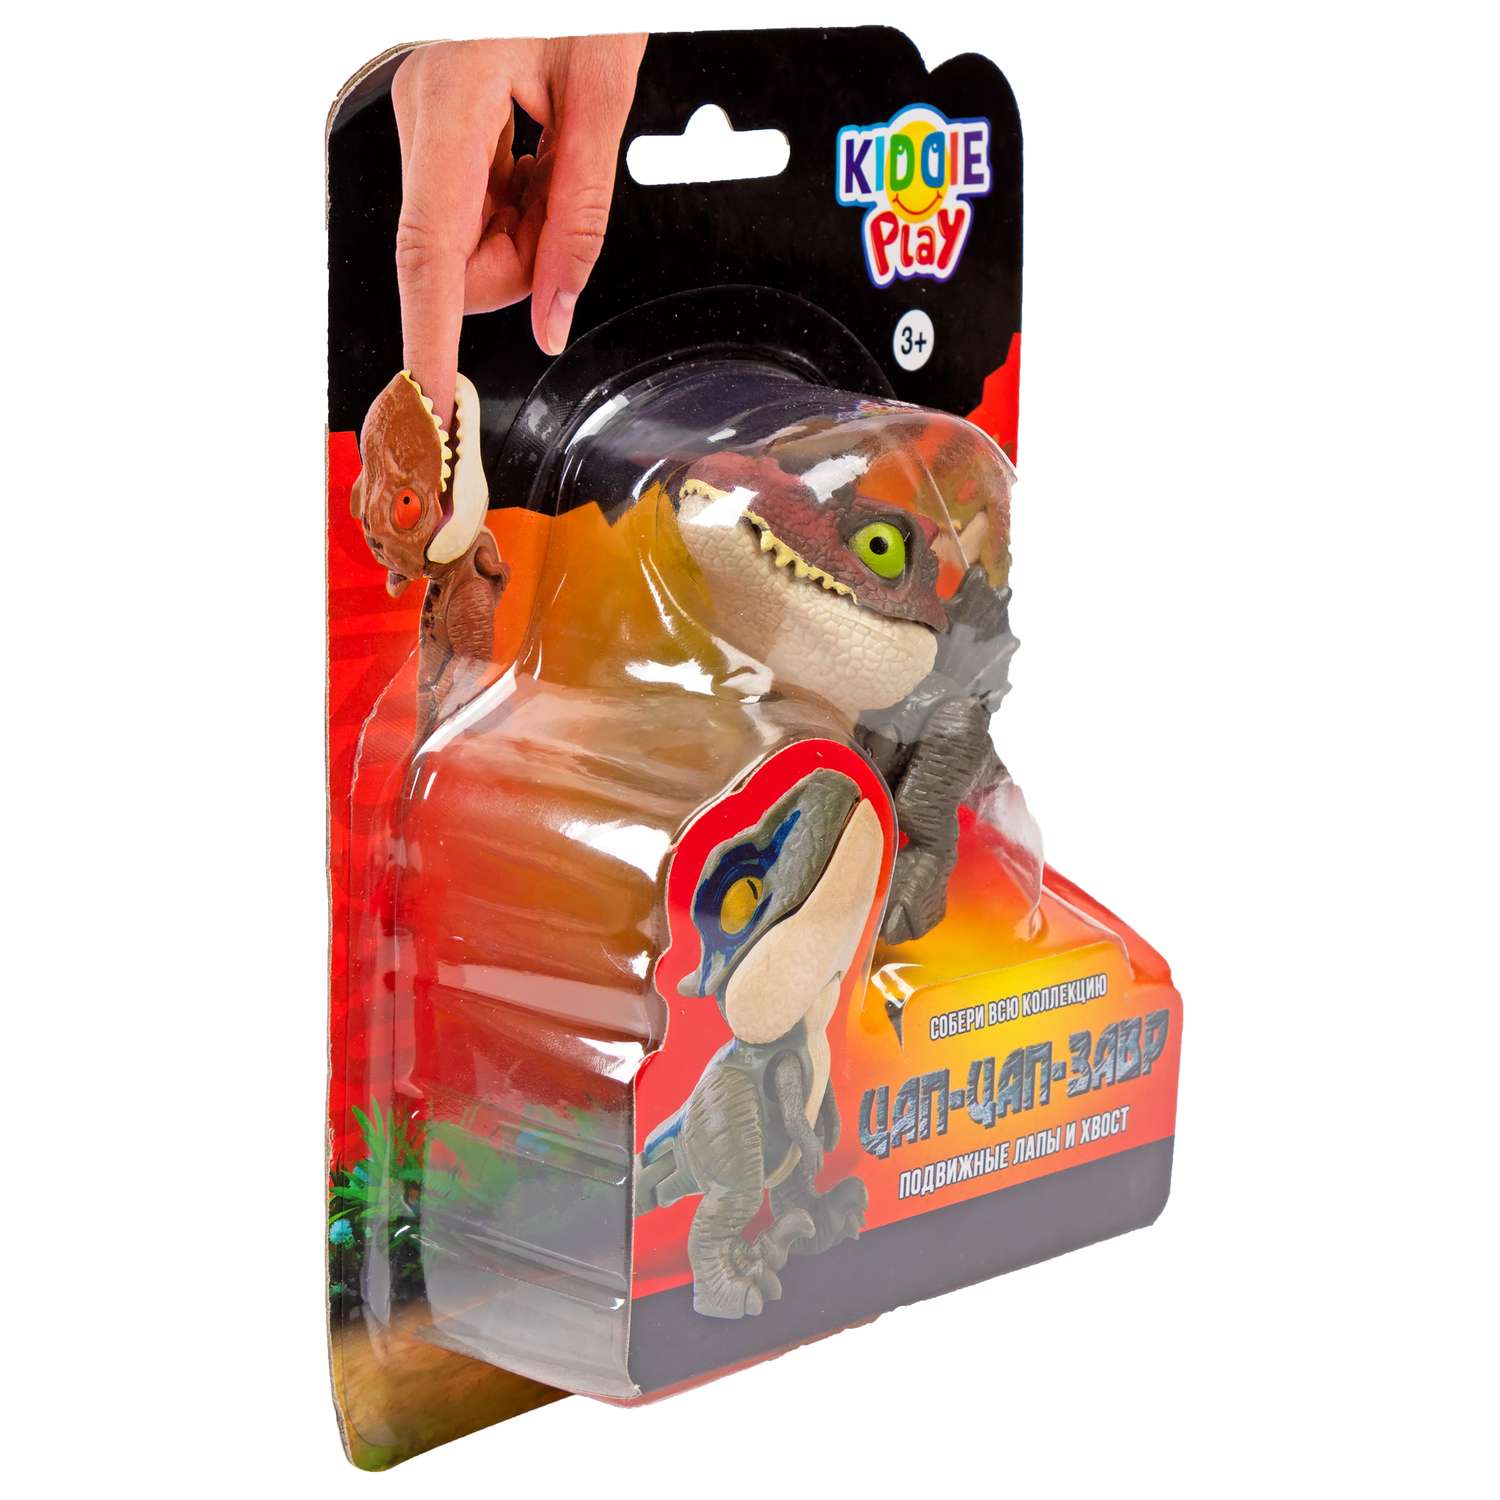 Игрушка KiddiePlay Динозавр Цап цап завр в ассортименте 12604 - фото 3